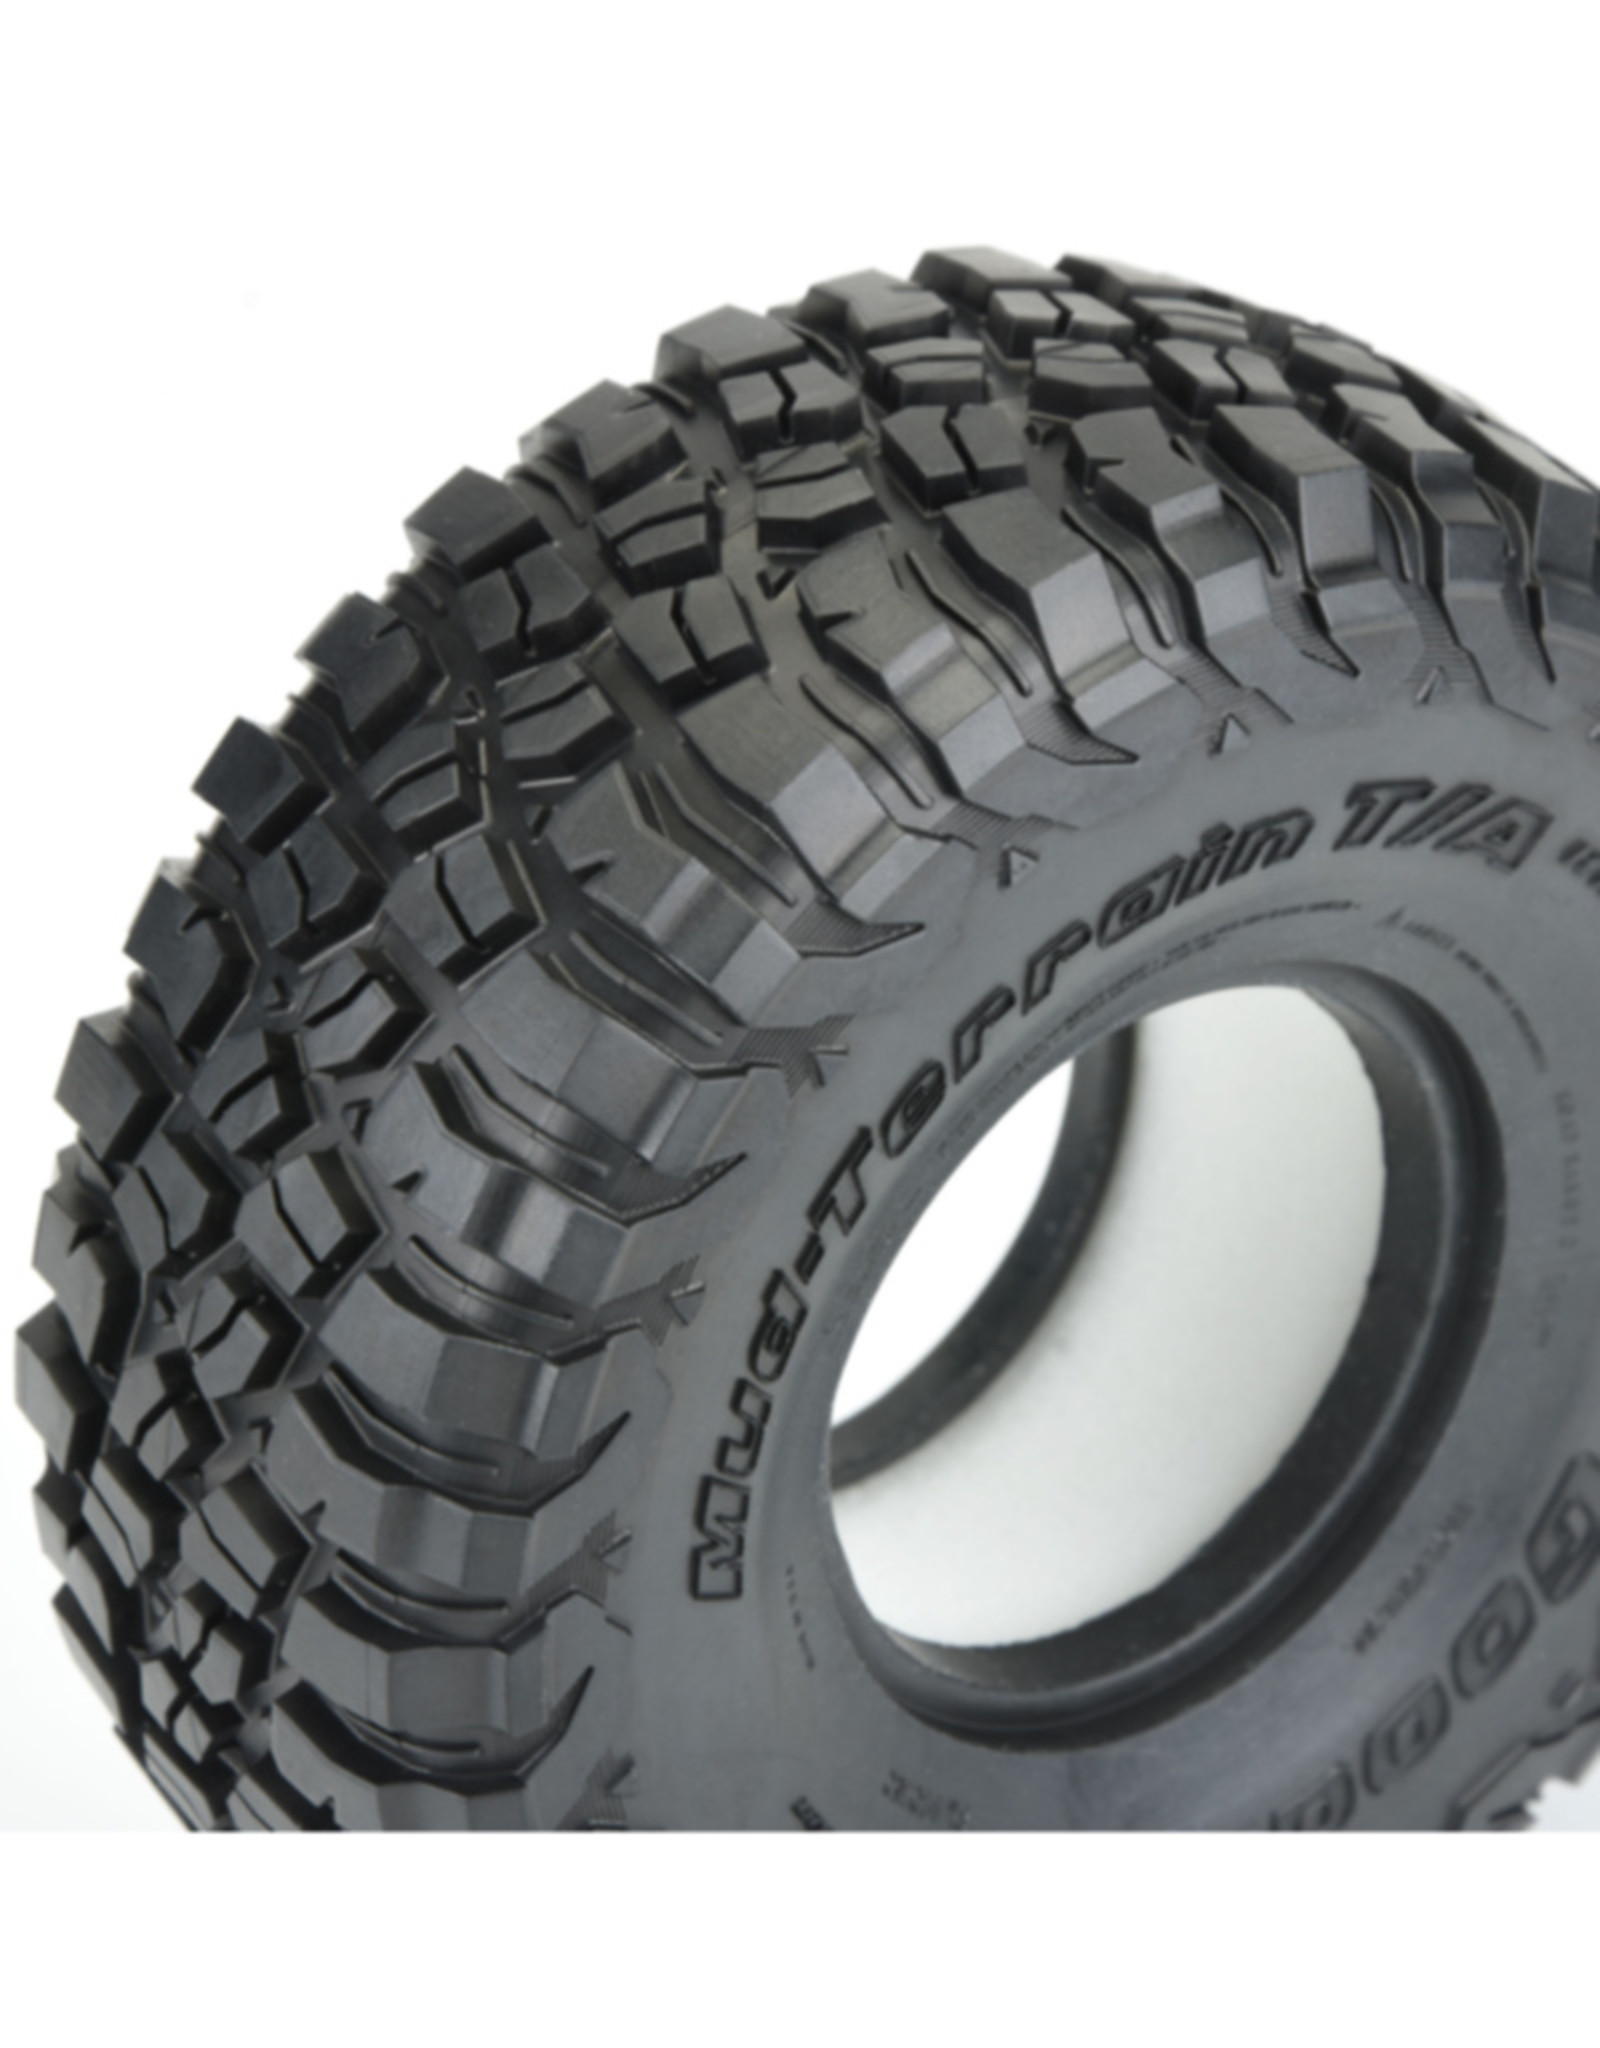 Pro-Line Racing PRO1015014 BFGoodrich Mud-Terrain T/A KM3 1.9 Crawler Tire